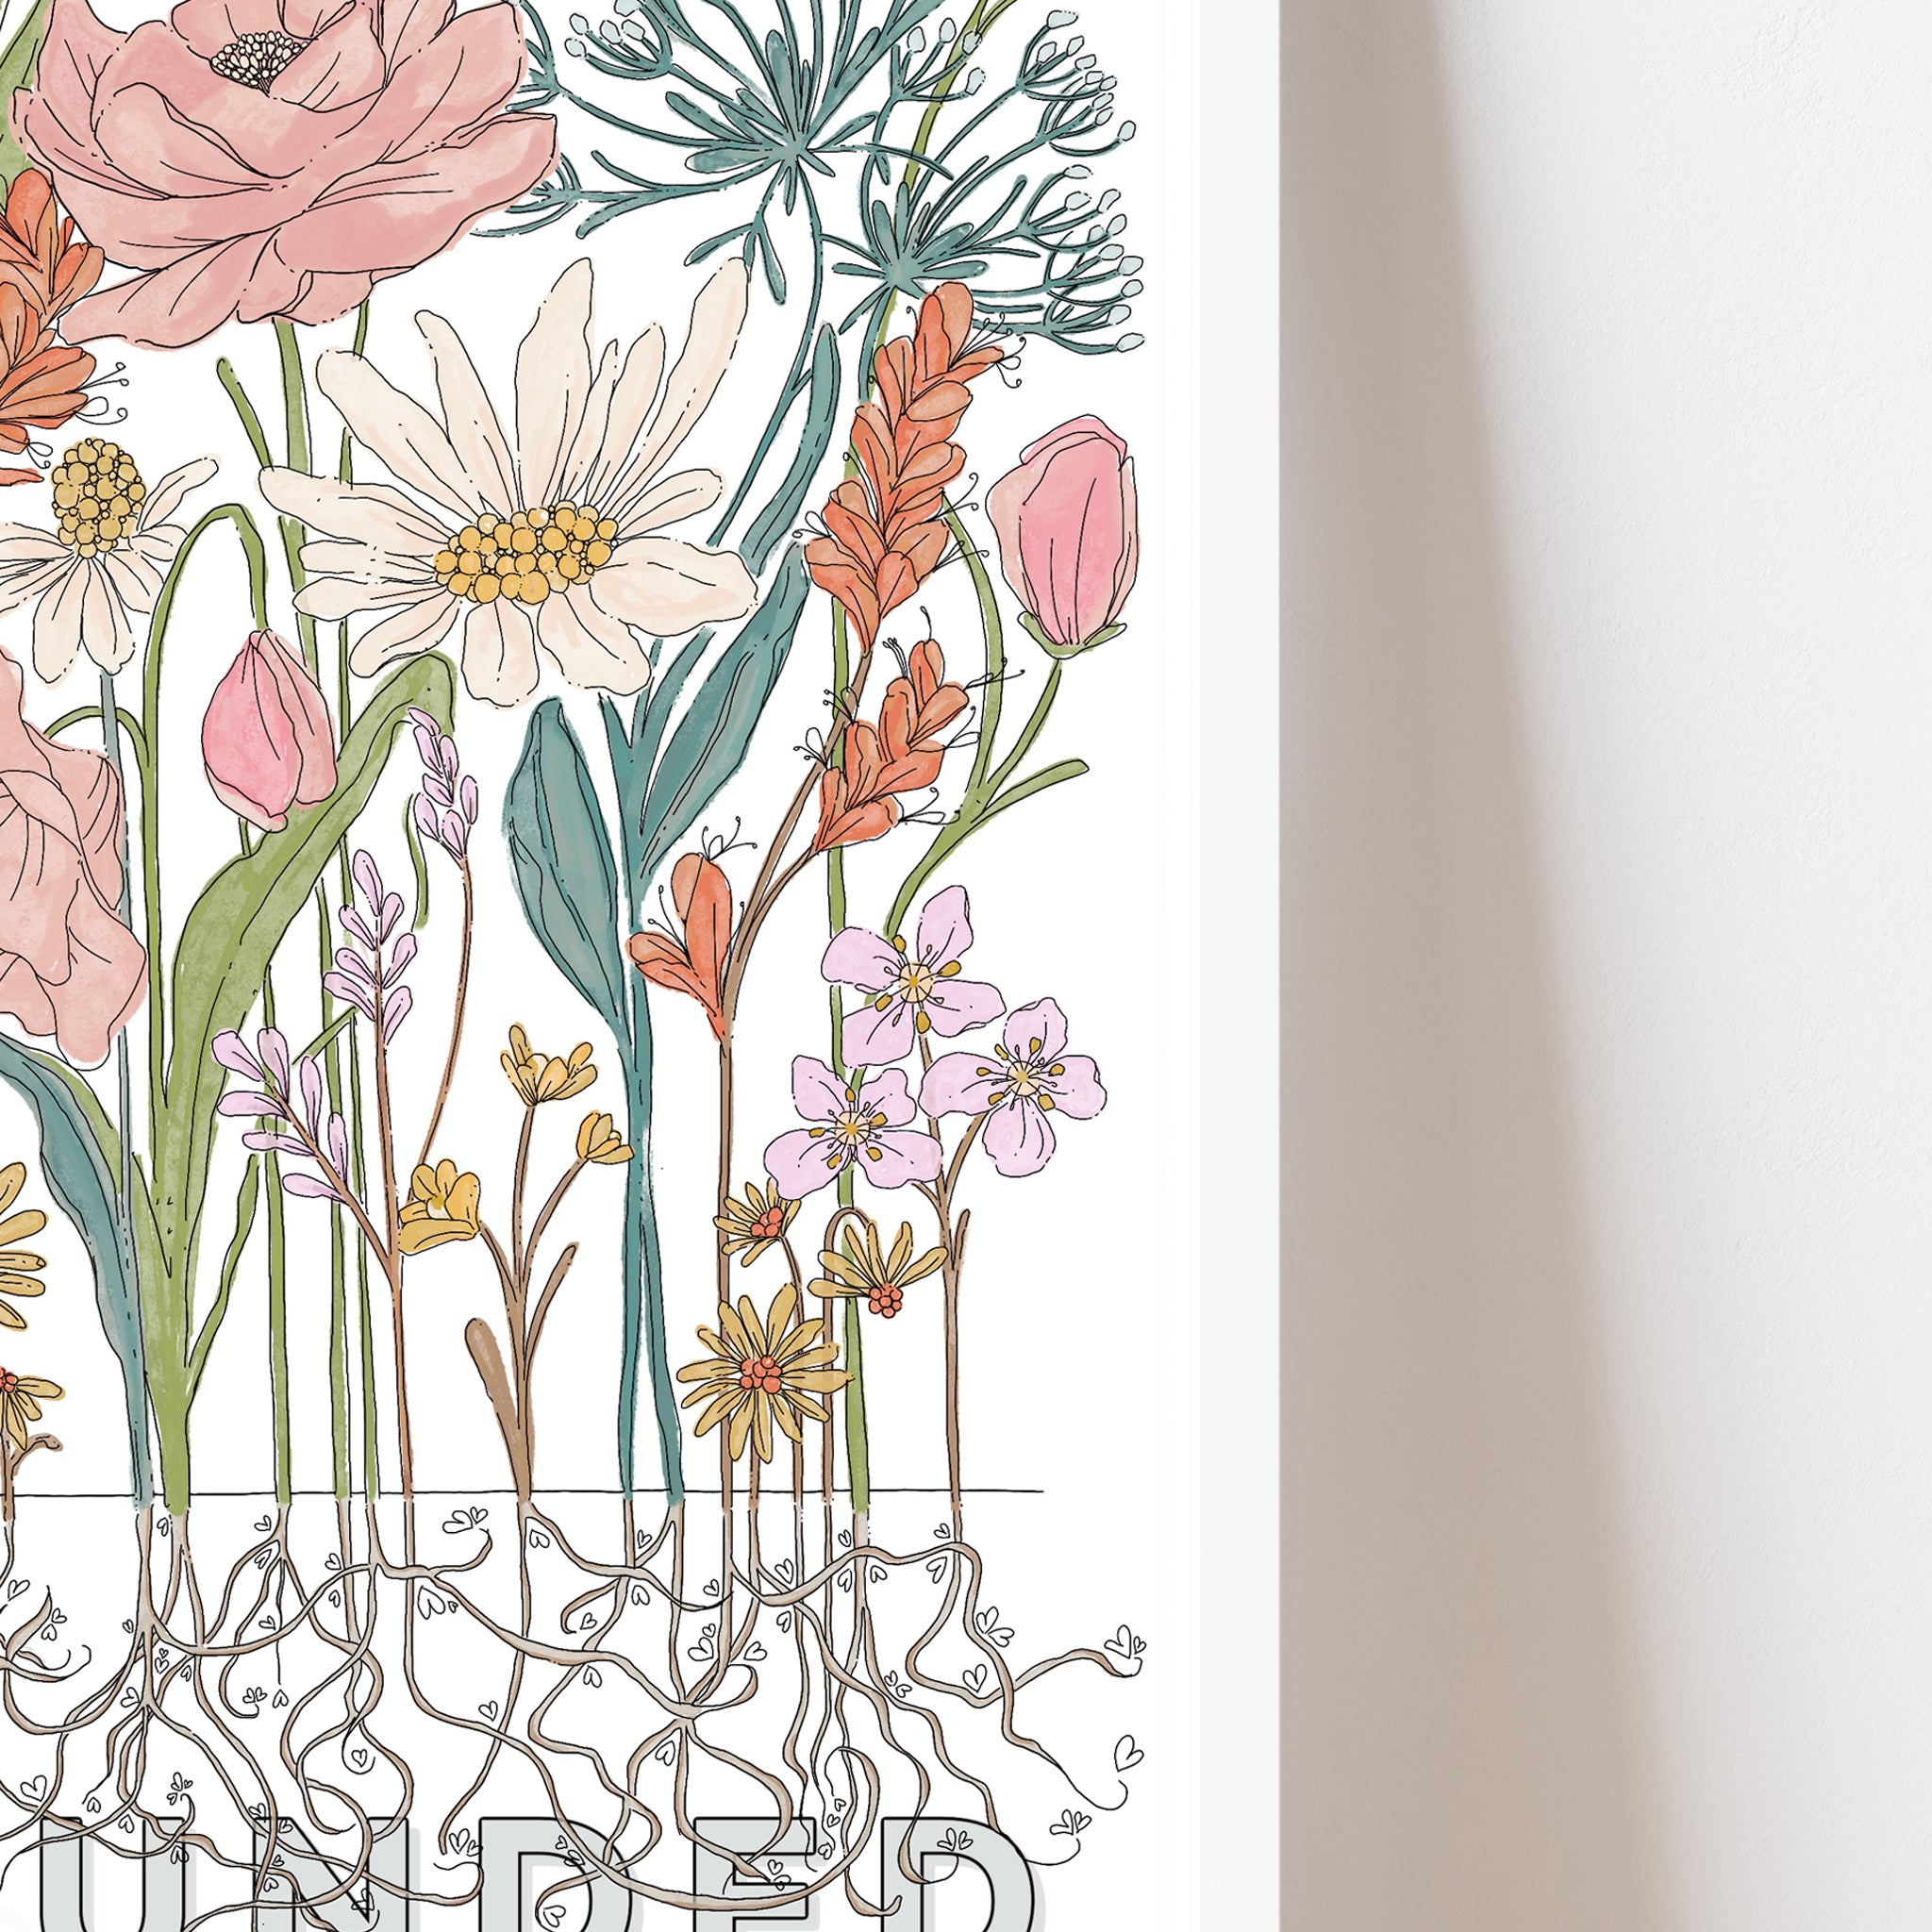 Grounded illustrated boho flowers print on white background